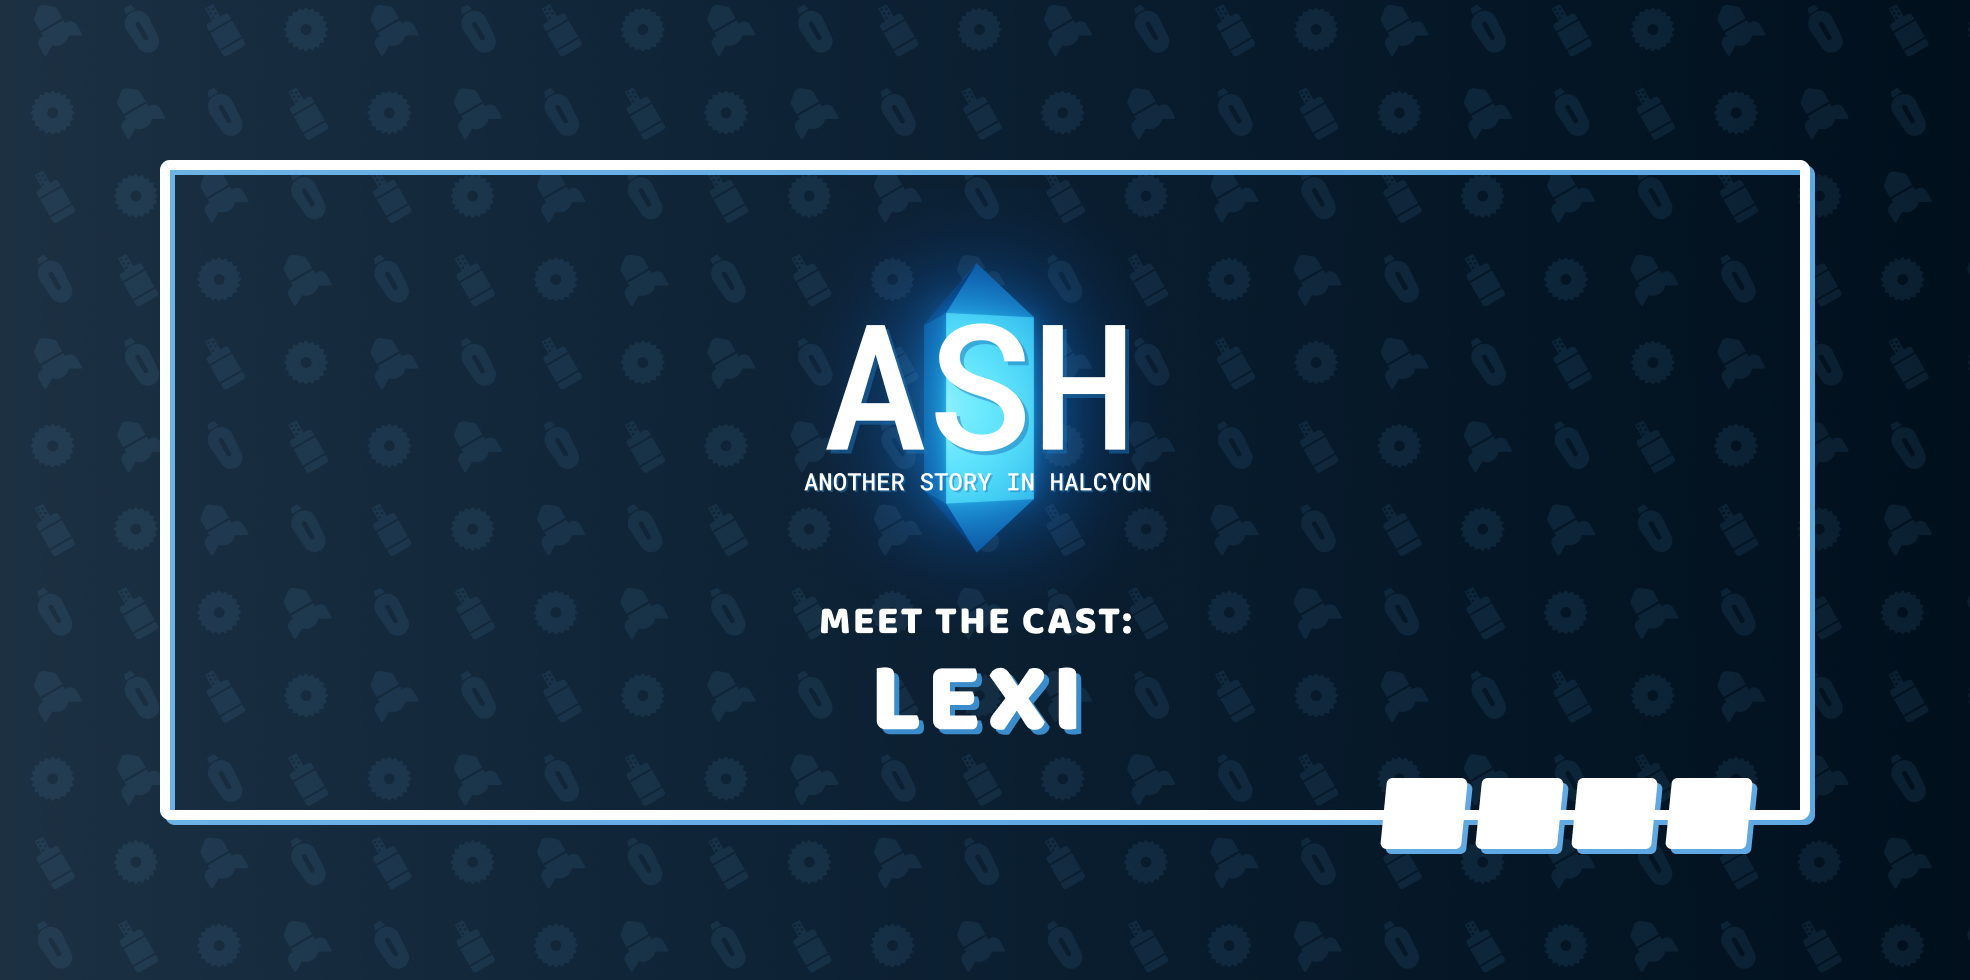 Meet the Cast: Lexi